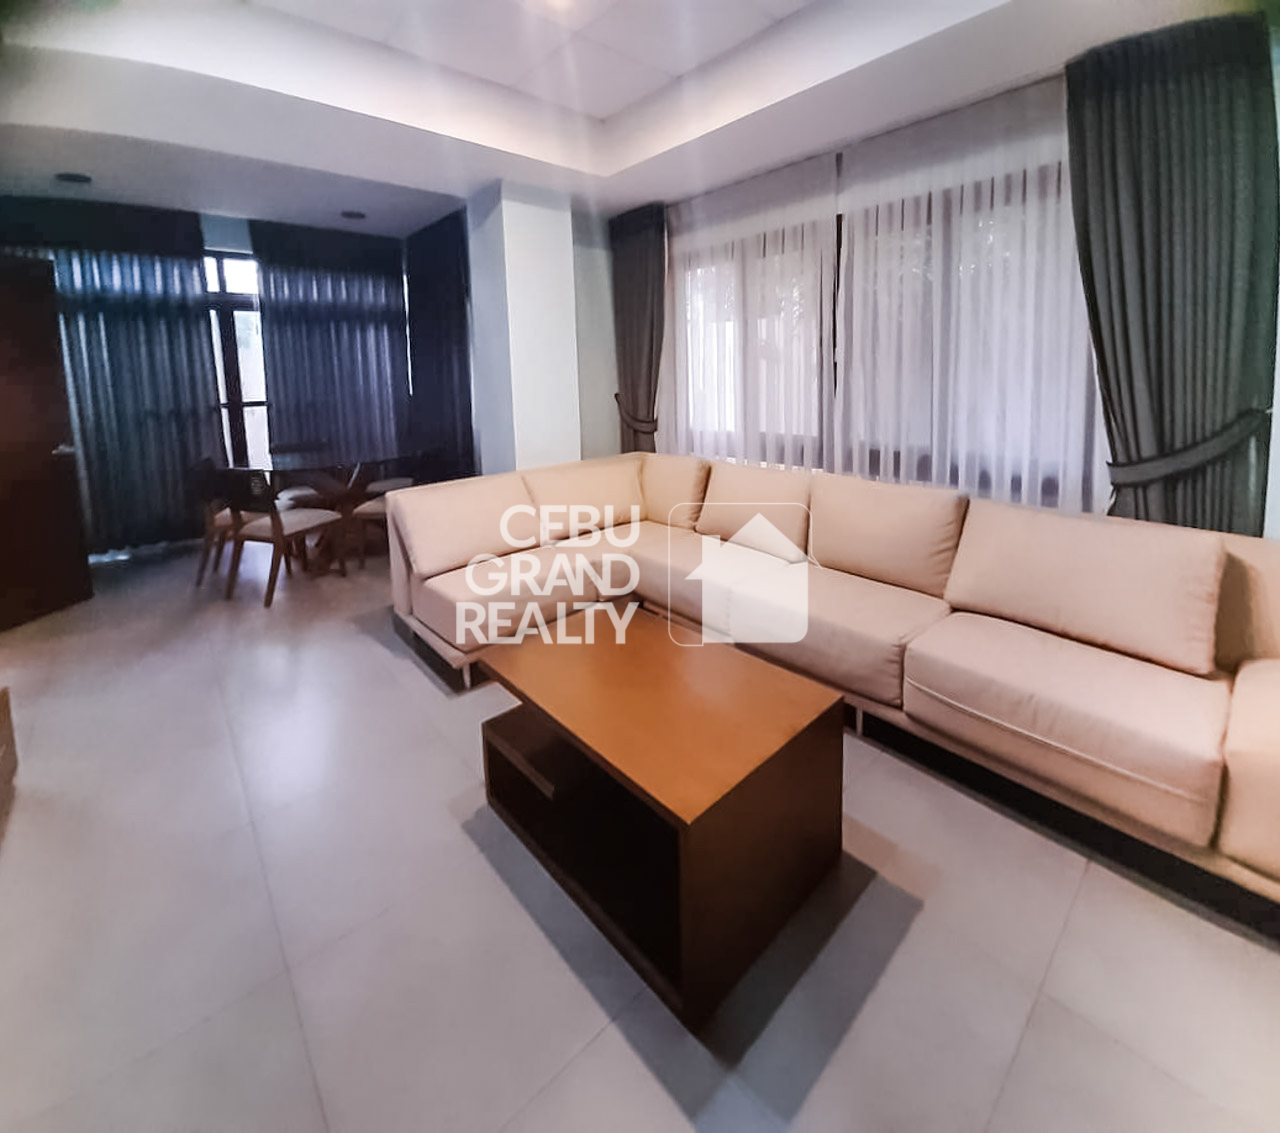 SRBAM3 6 Bedroom House for Sale in Amara Liloan - Cebu Grand Realty (7)